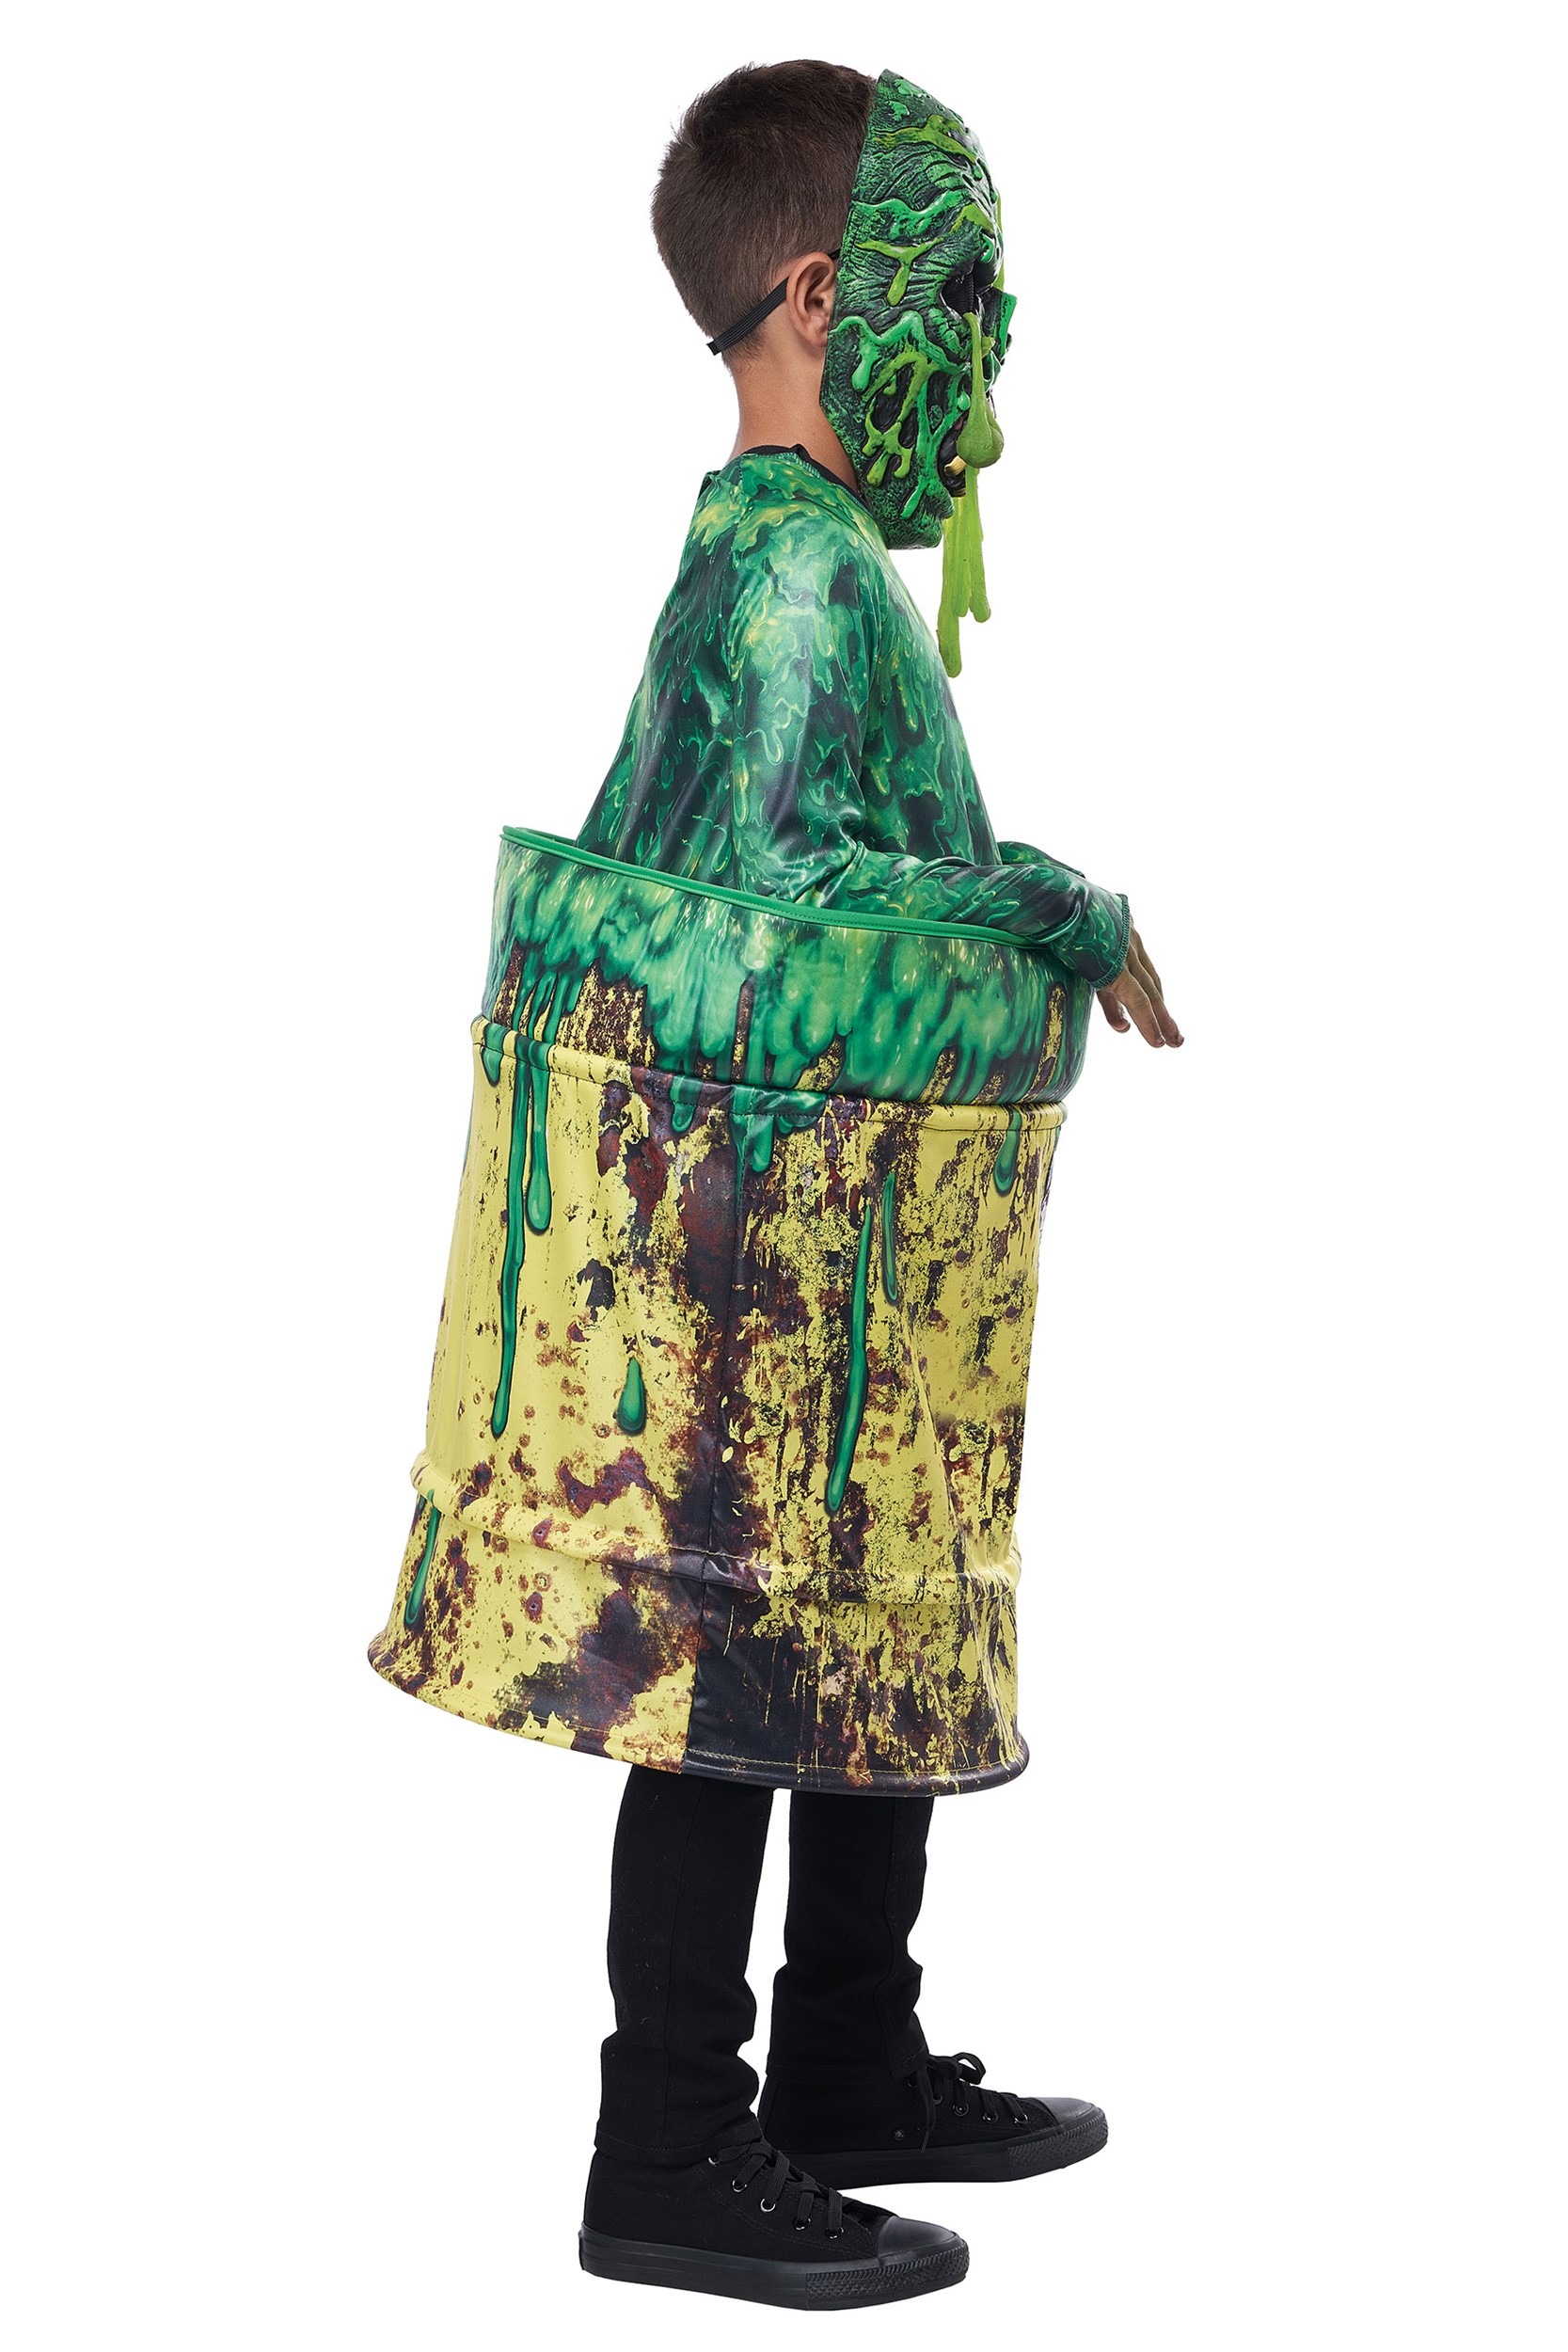 Hazardous Waste Costume For Kids